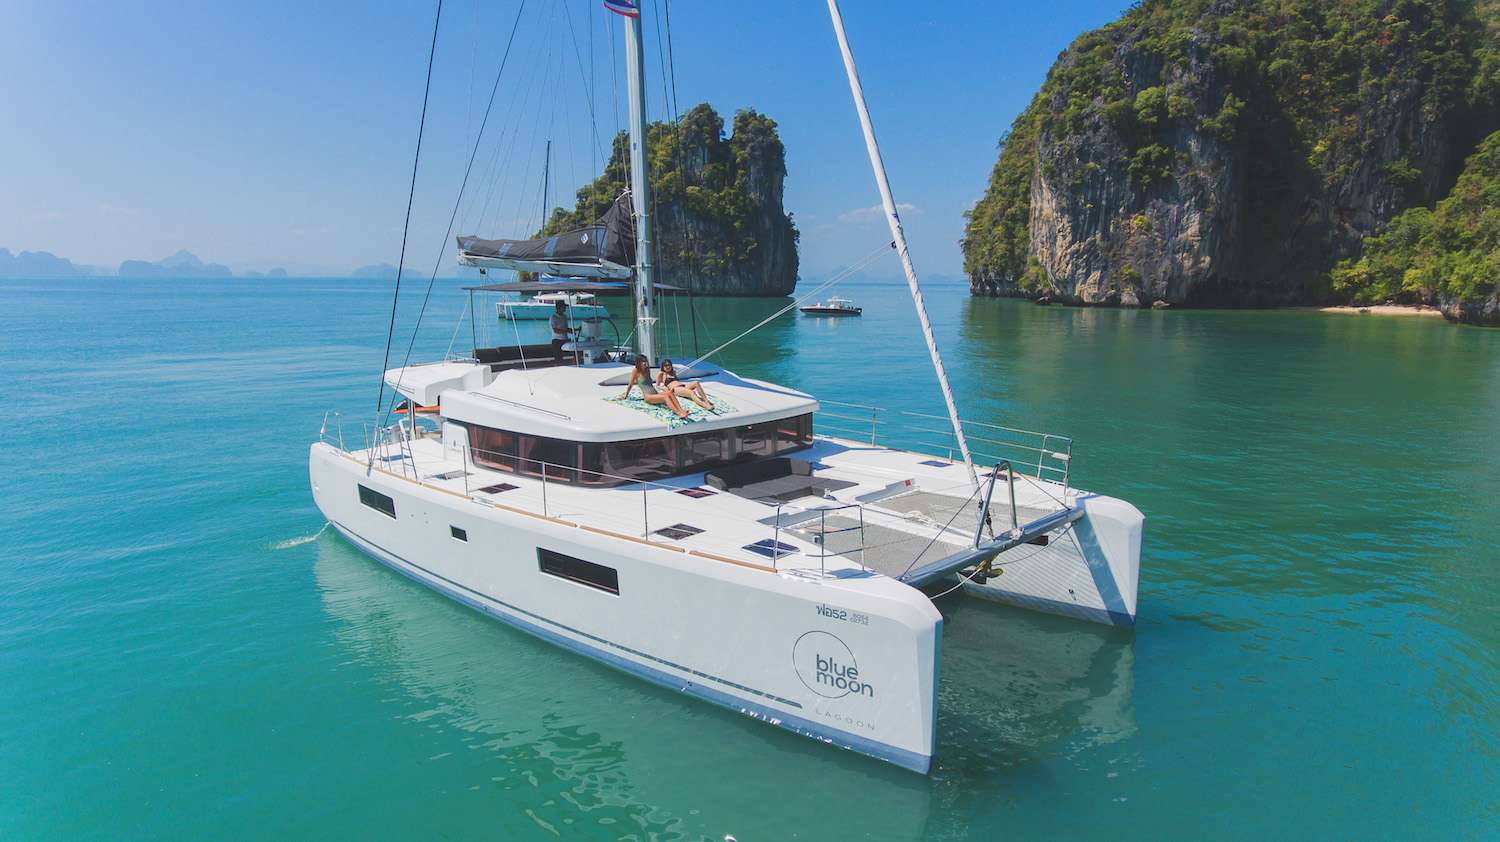 blue moon - Yacht Charter Kuredhivaru & Boat hire in Indian Ocean & SE Asia 2